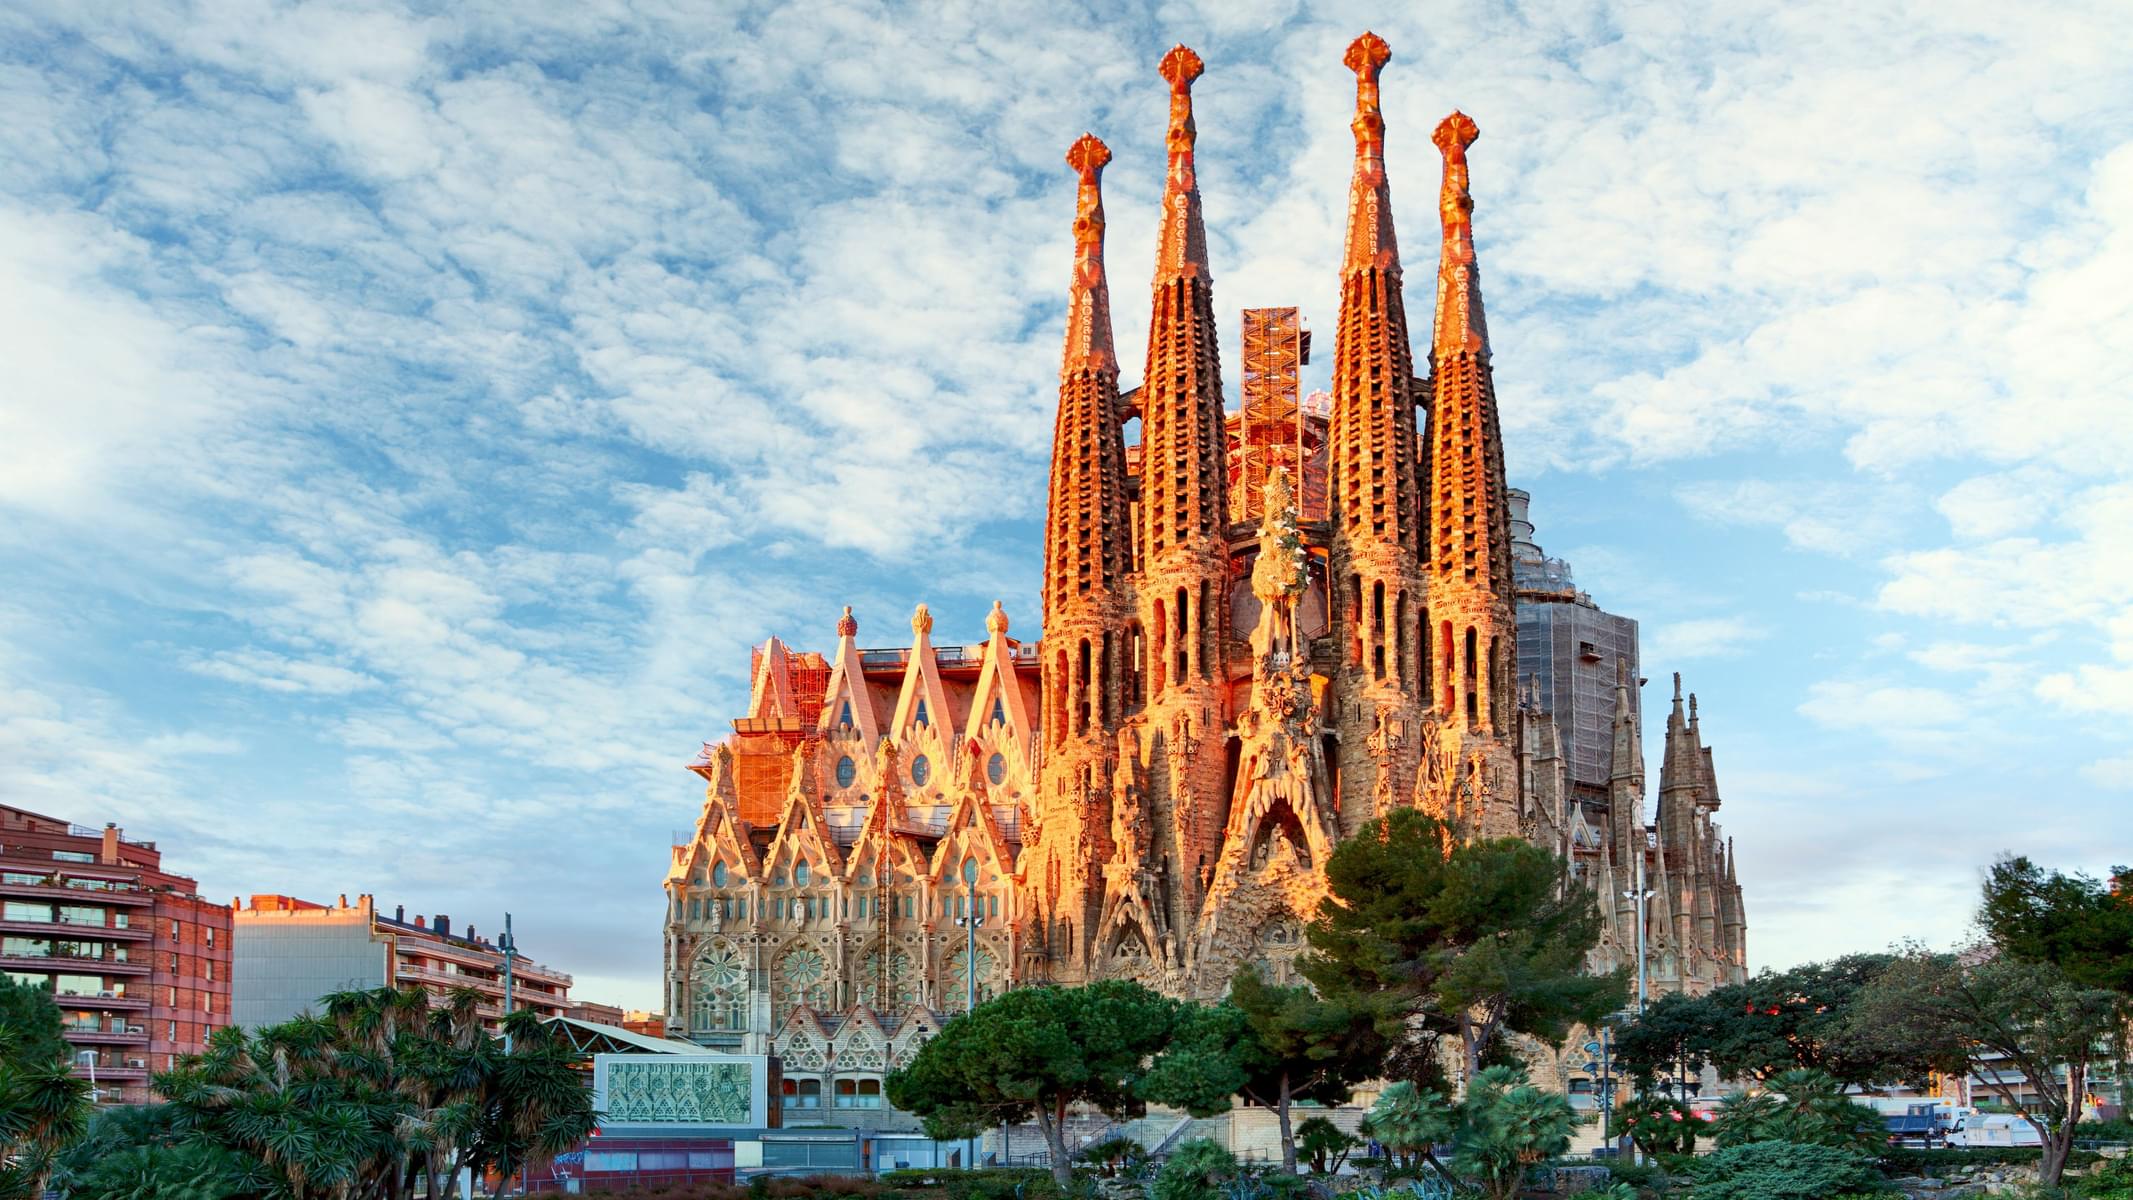 Why To Book La Sagrada Familia Tickets Online?